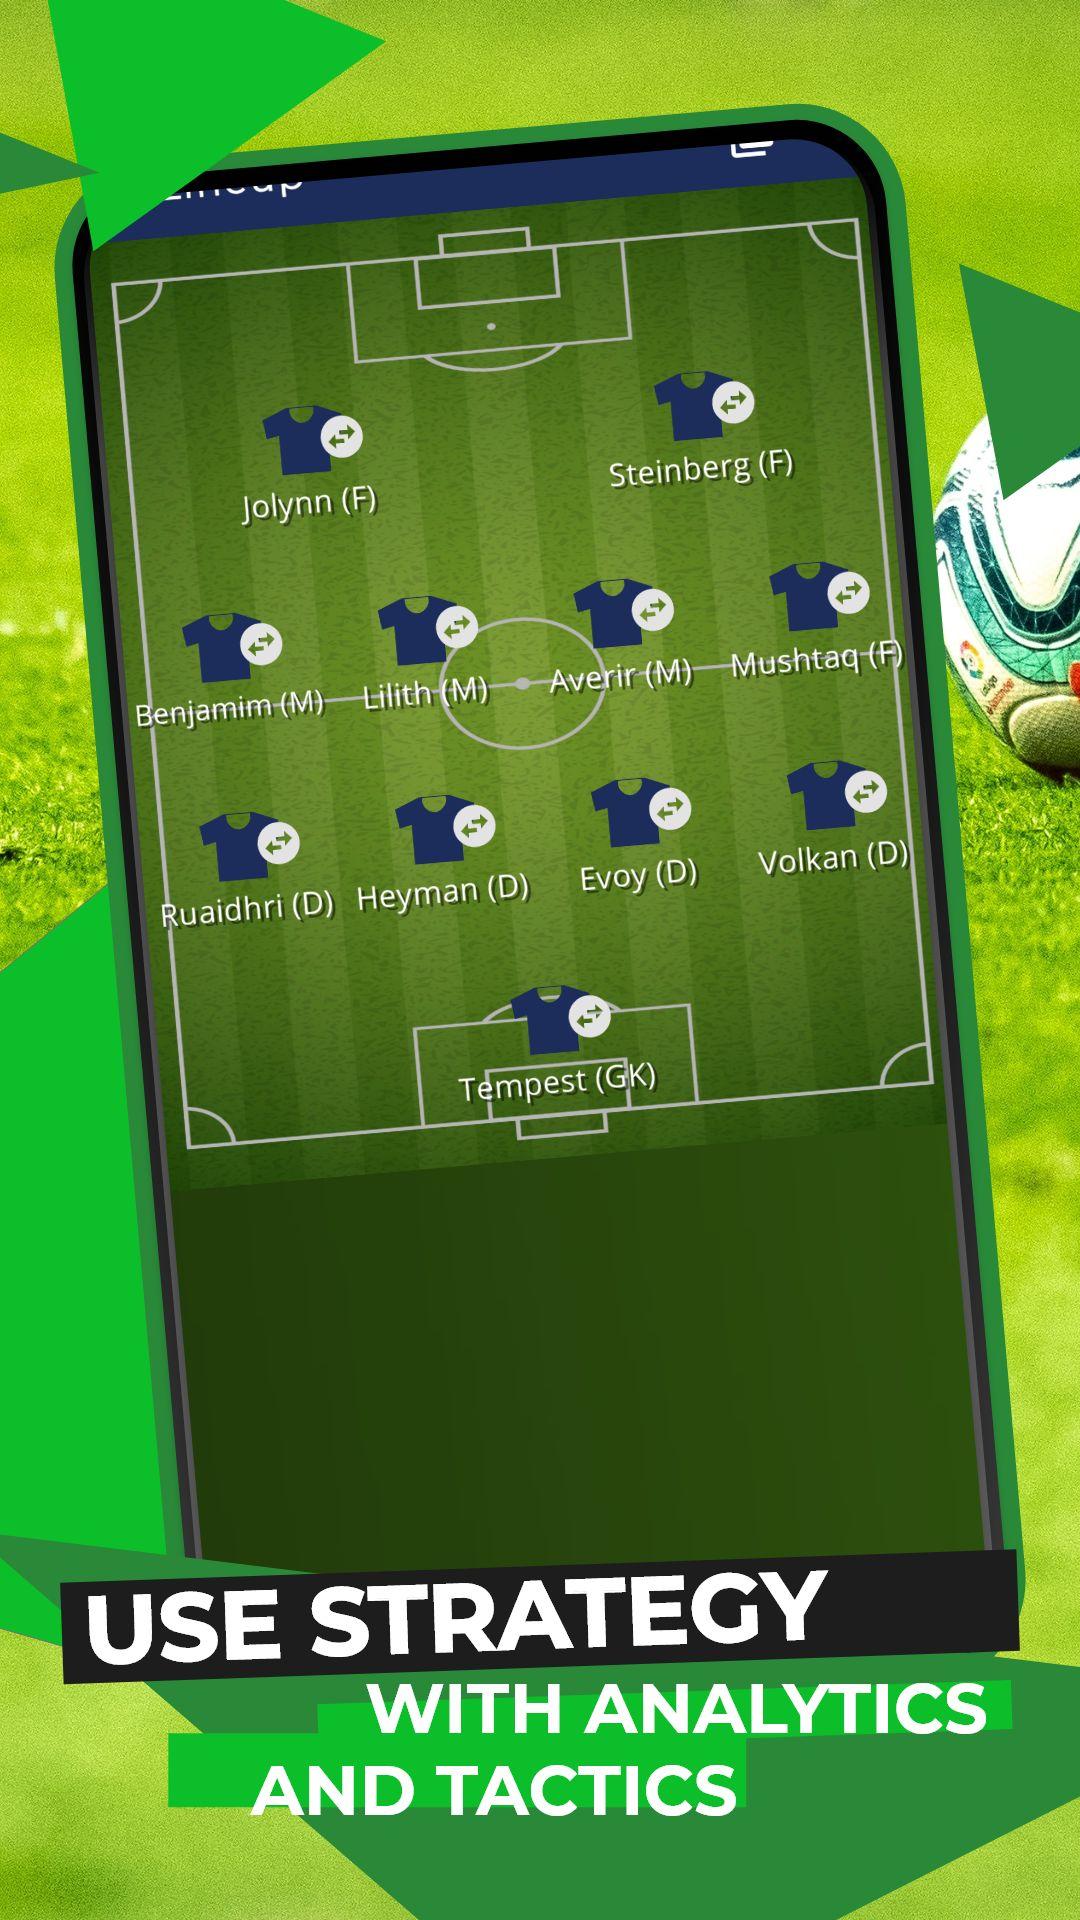 Astonishing Eleven - Football Management game 0.96 Screenshot 4